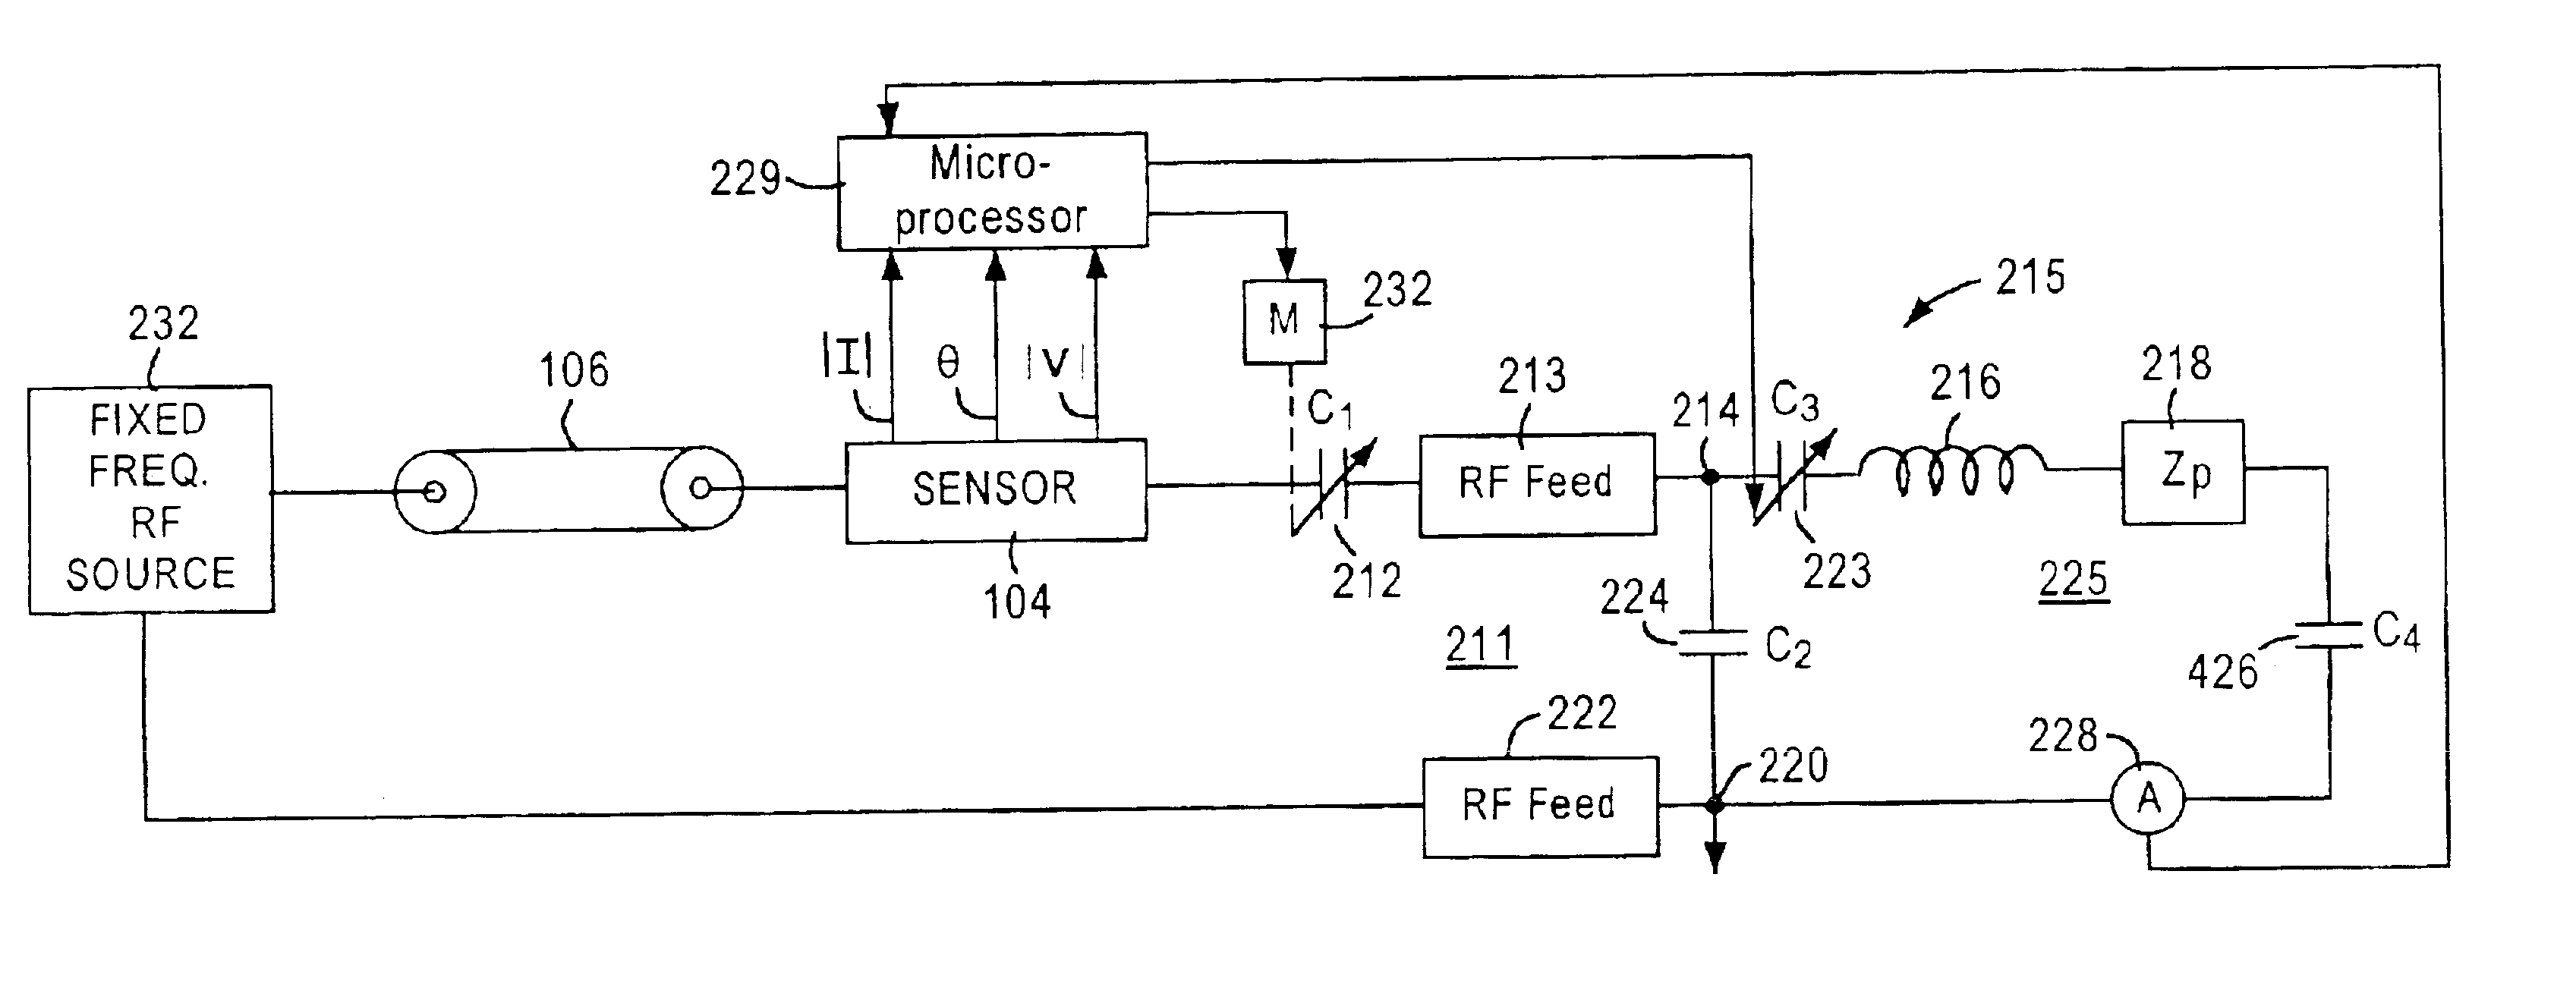 Plasma processor apparatus and method, and antenna